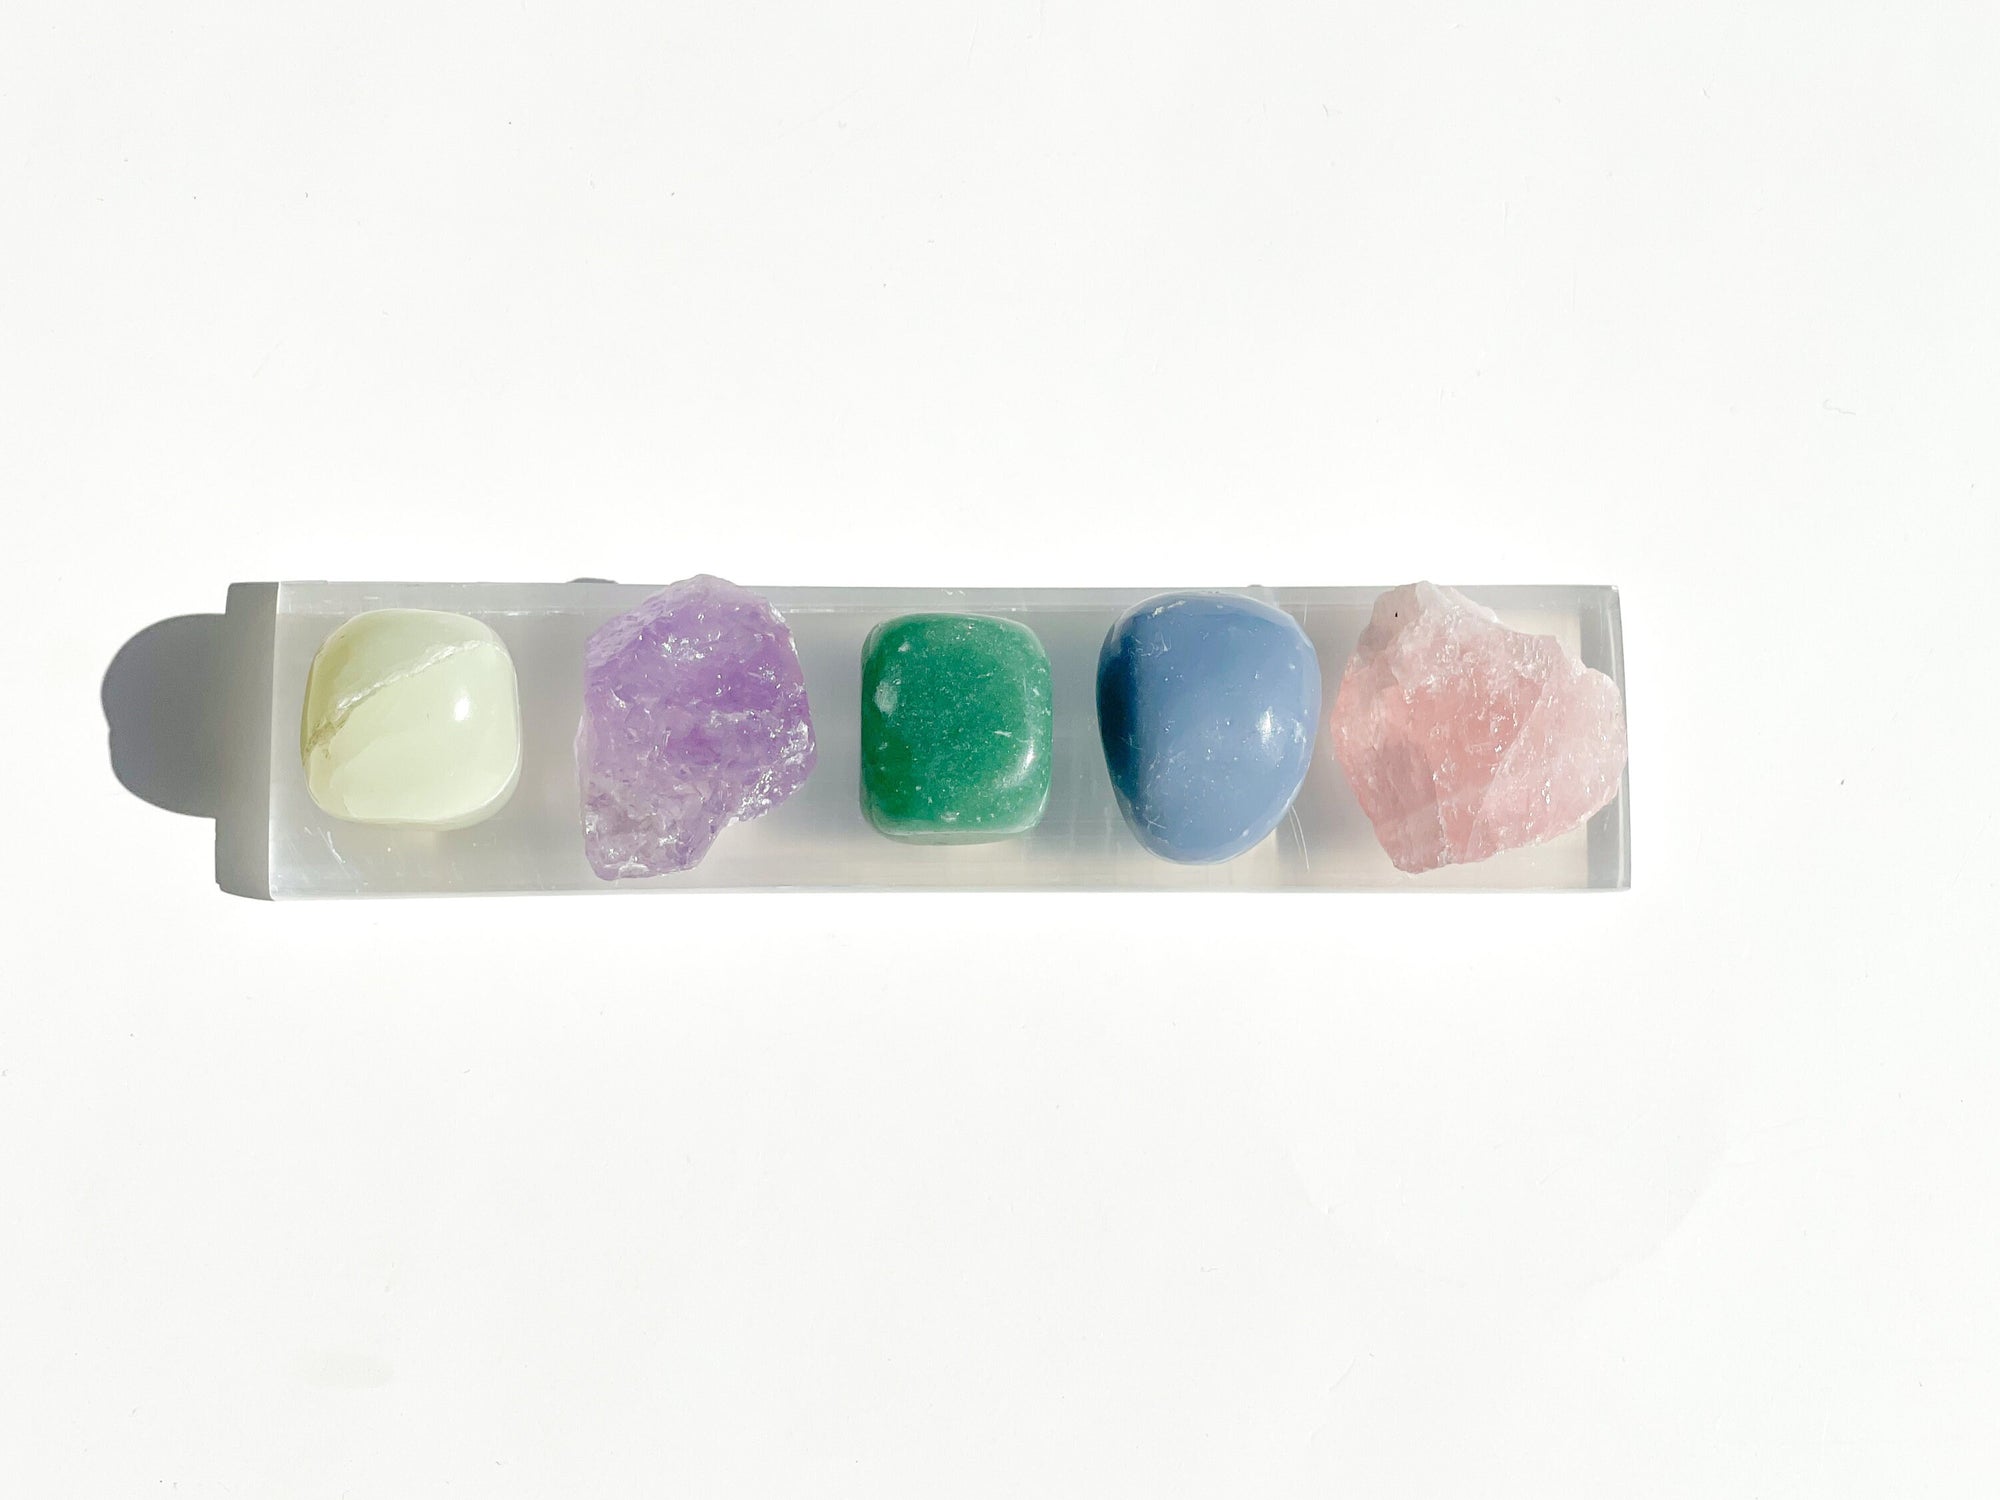 Aquarius Zodiac Crystal Set with Selenite Plate: Angelite, Aventurine, Jade, Amethyst, Rose Quartz - Healing Stones, Cotton Pouch, Info Card